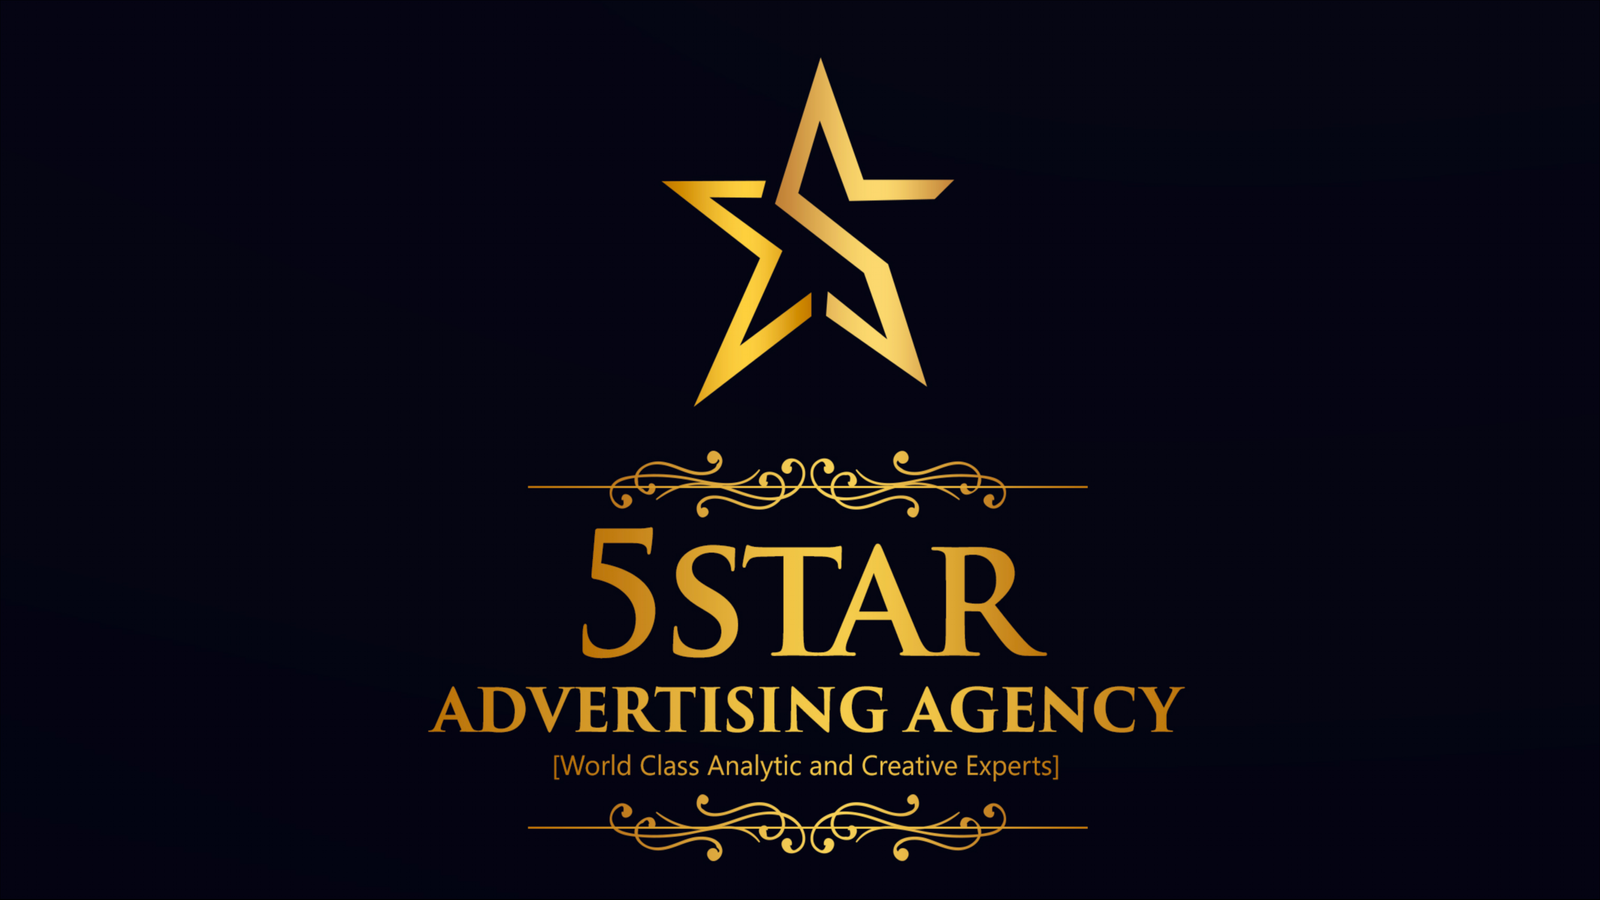 5 star agency